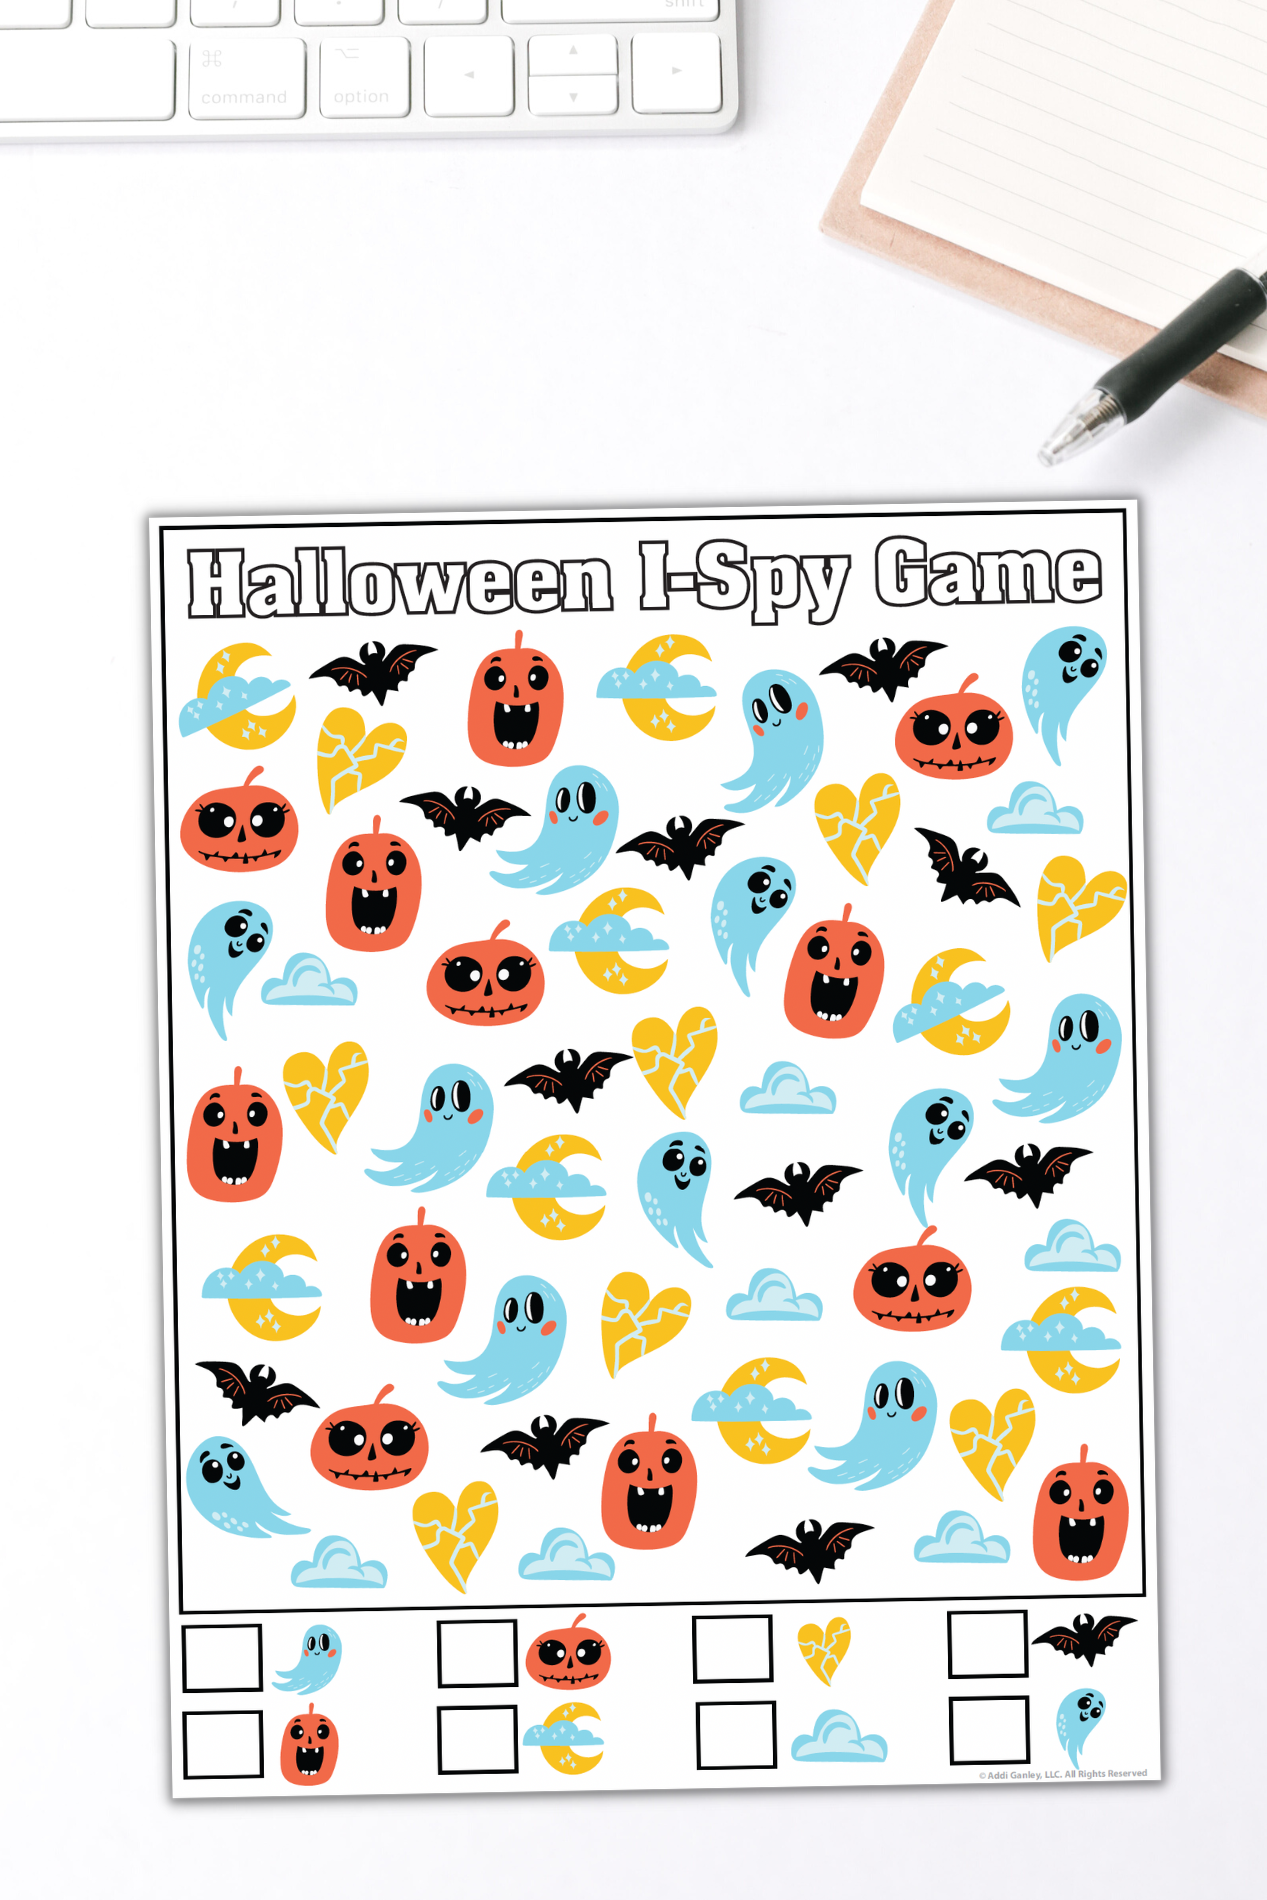 Halloween I-Spy Game